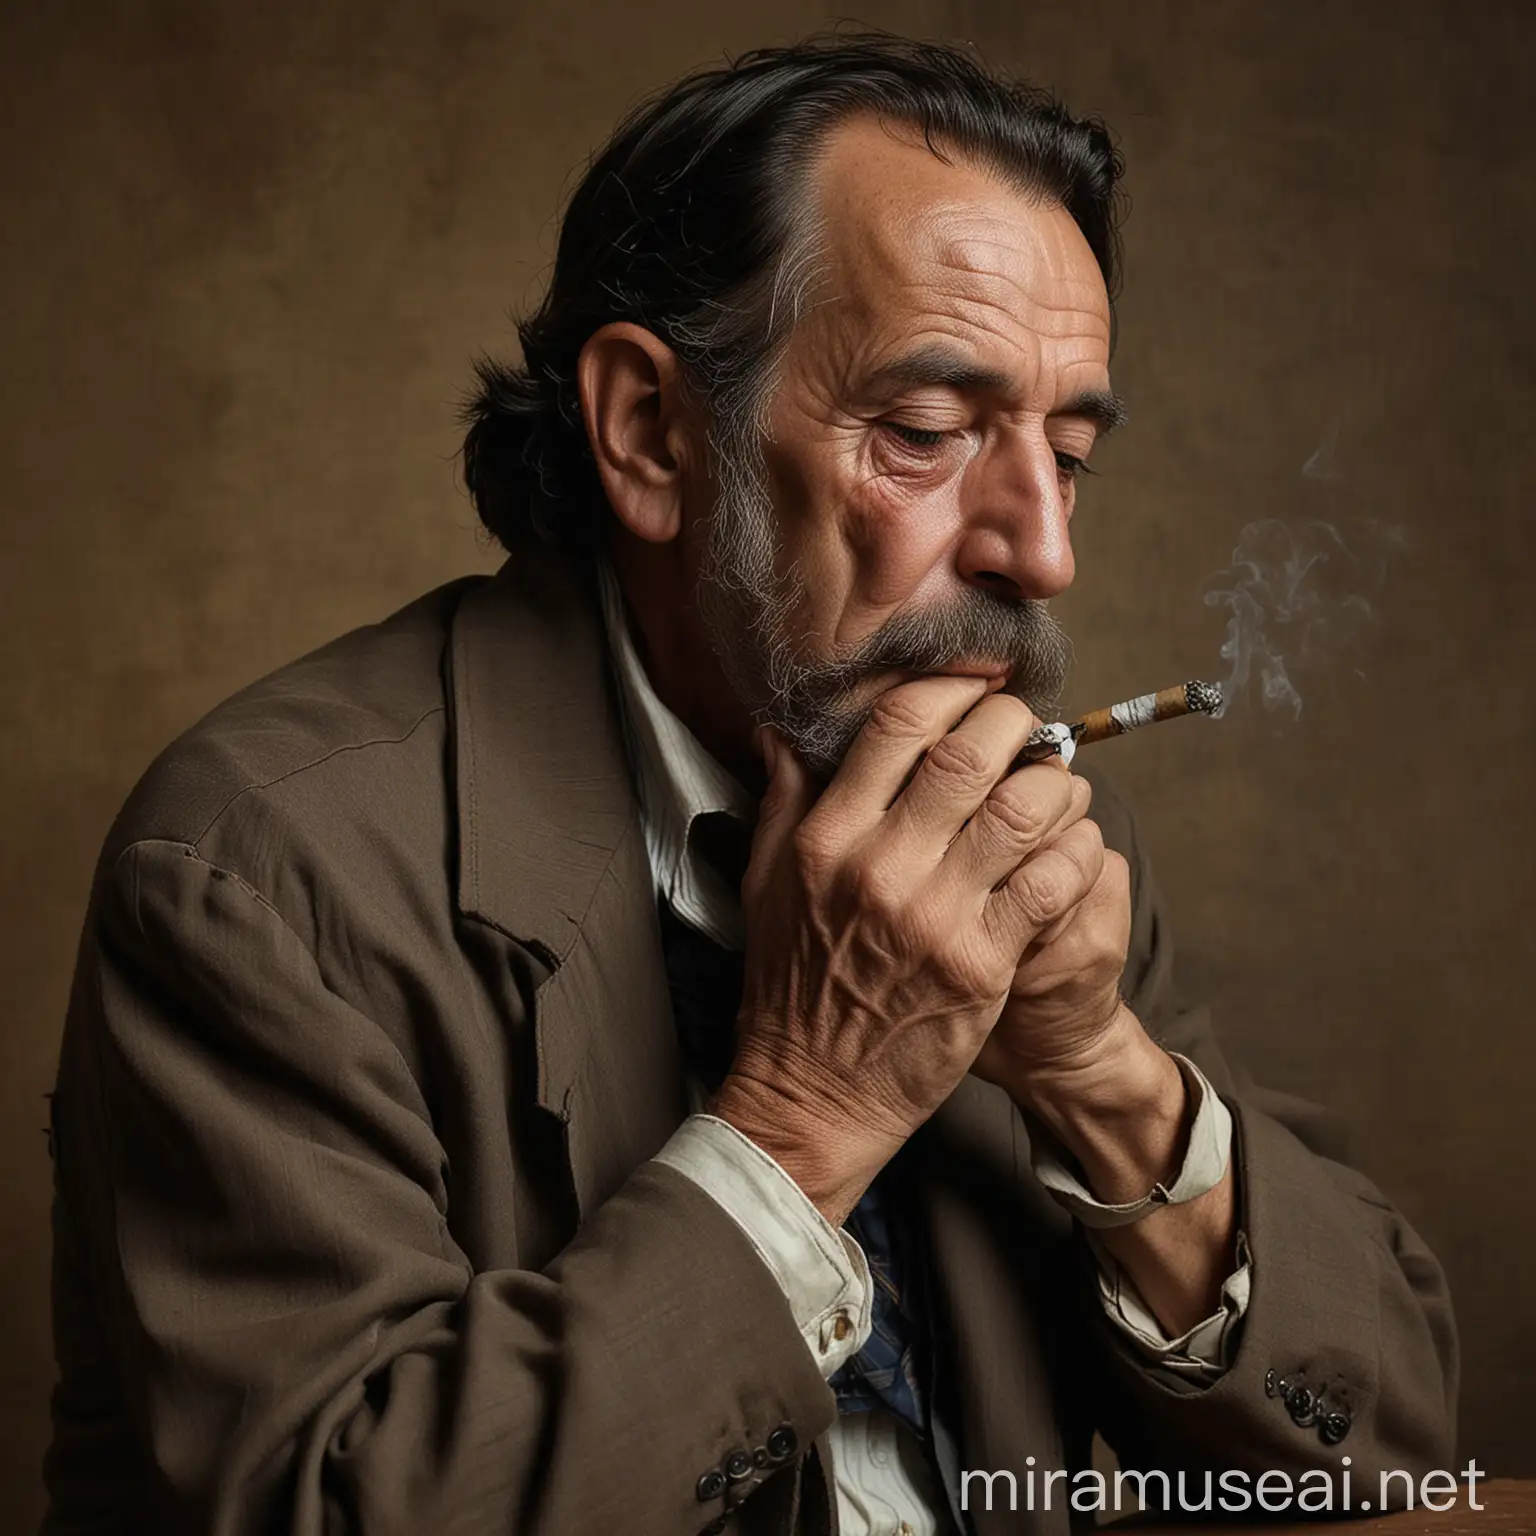 MiddleAged Man Smoking Marijuana in Relaxed Posture